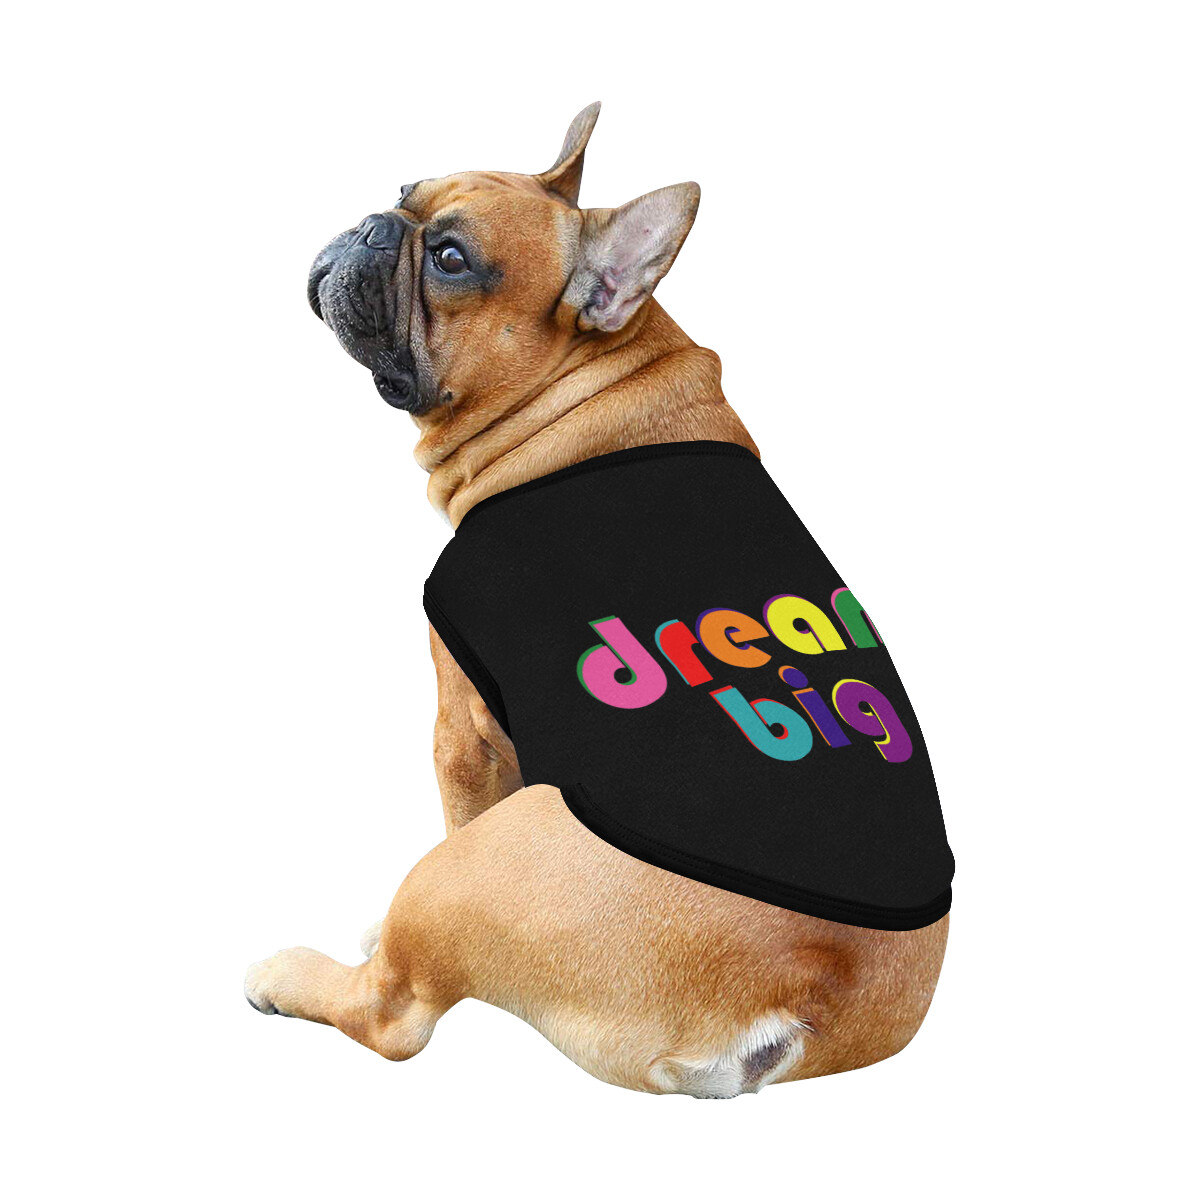 🐕 Dream Big Dog shirt Dog Tank Top, Dog t-shirt, Dog clothes, Gifts, front back print, 7 sizes XS to 3XL, dog gifts, black